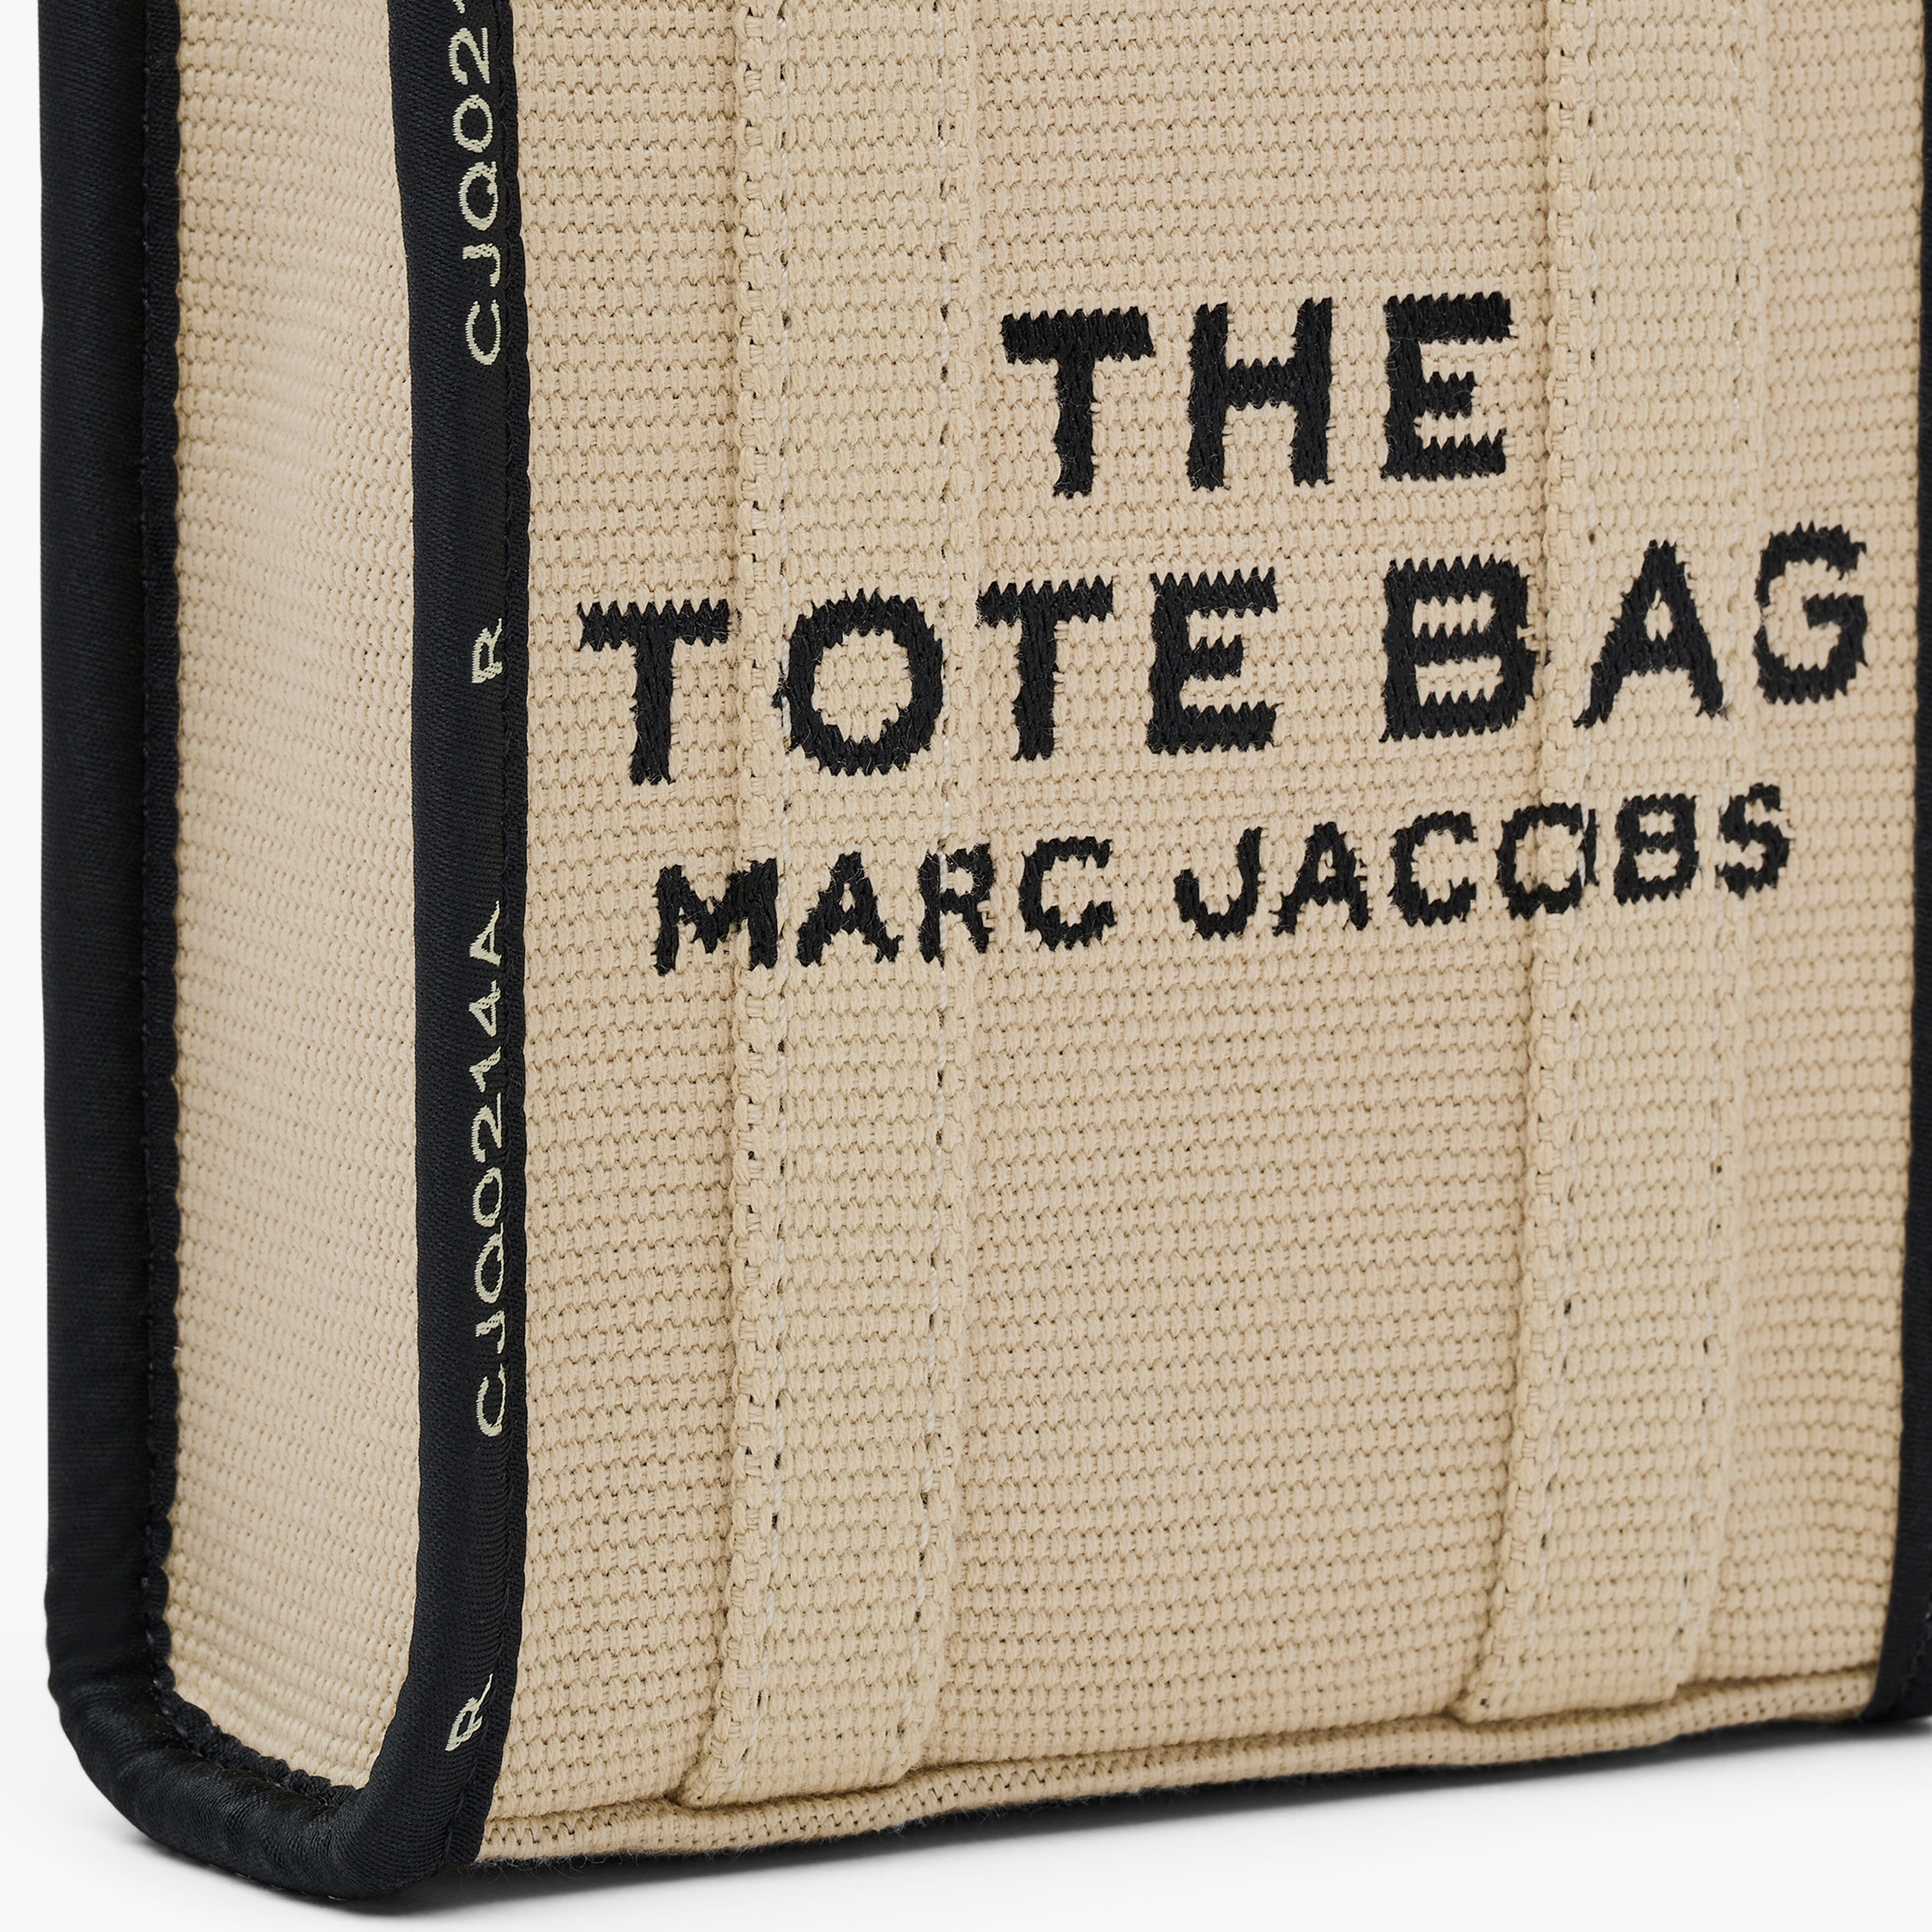 MARC JACOBS - The Phone Tote Bag - 2R3HCR027H01 - 263 - Warm Sand Borse Marc Jacobs 